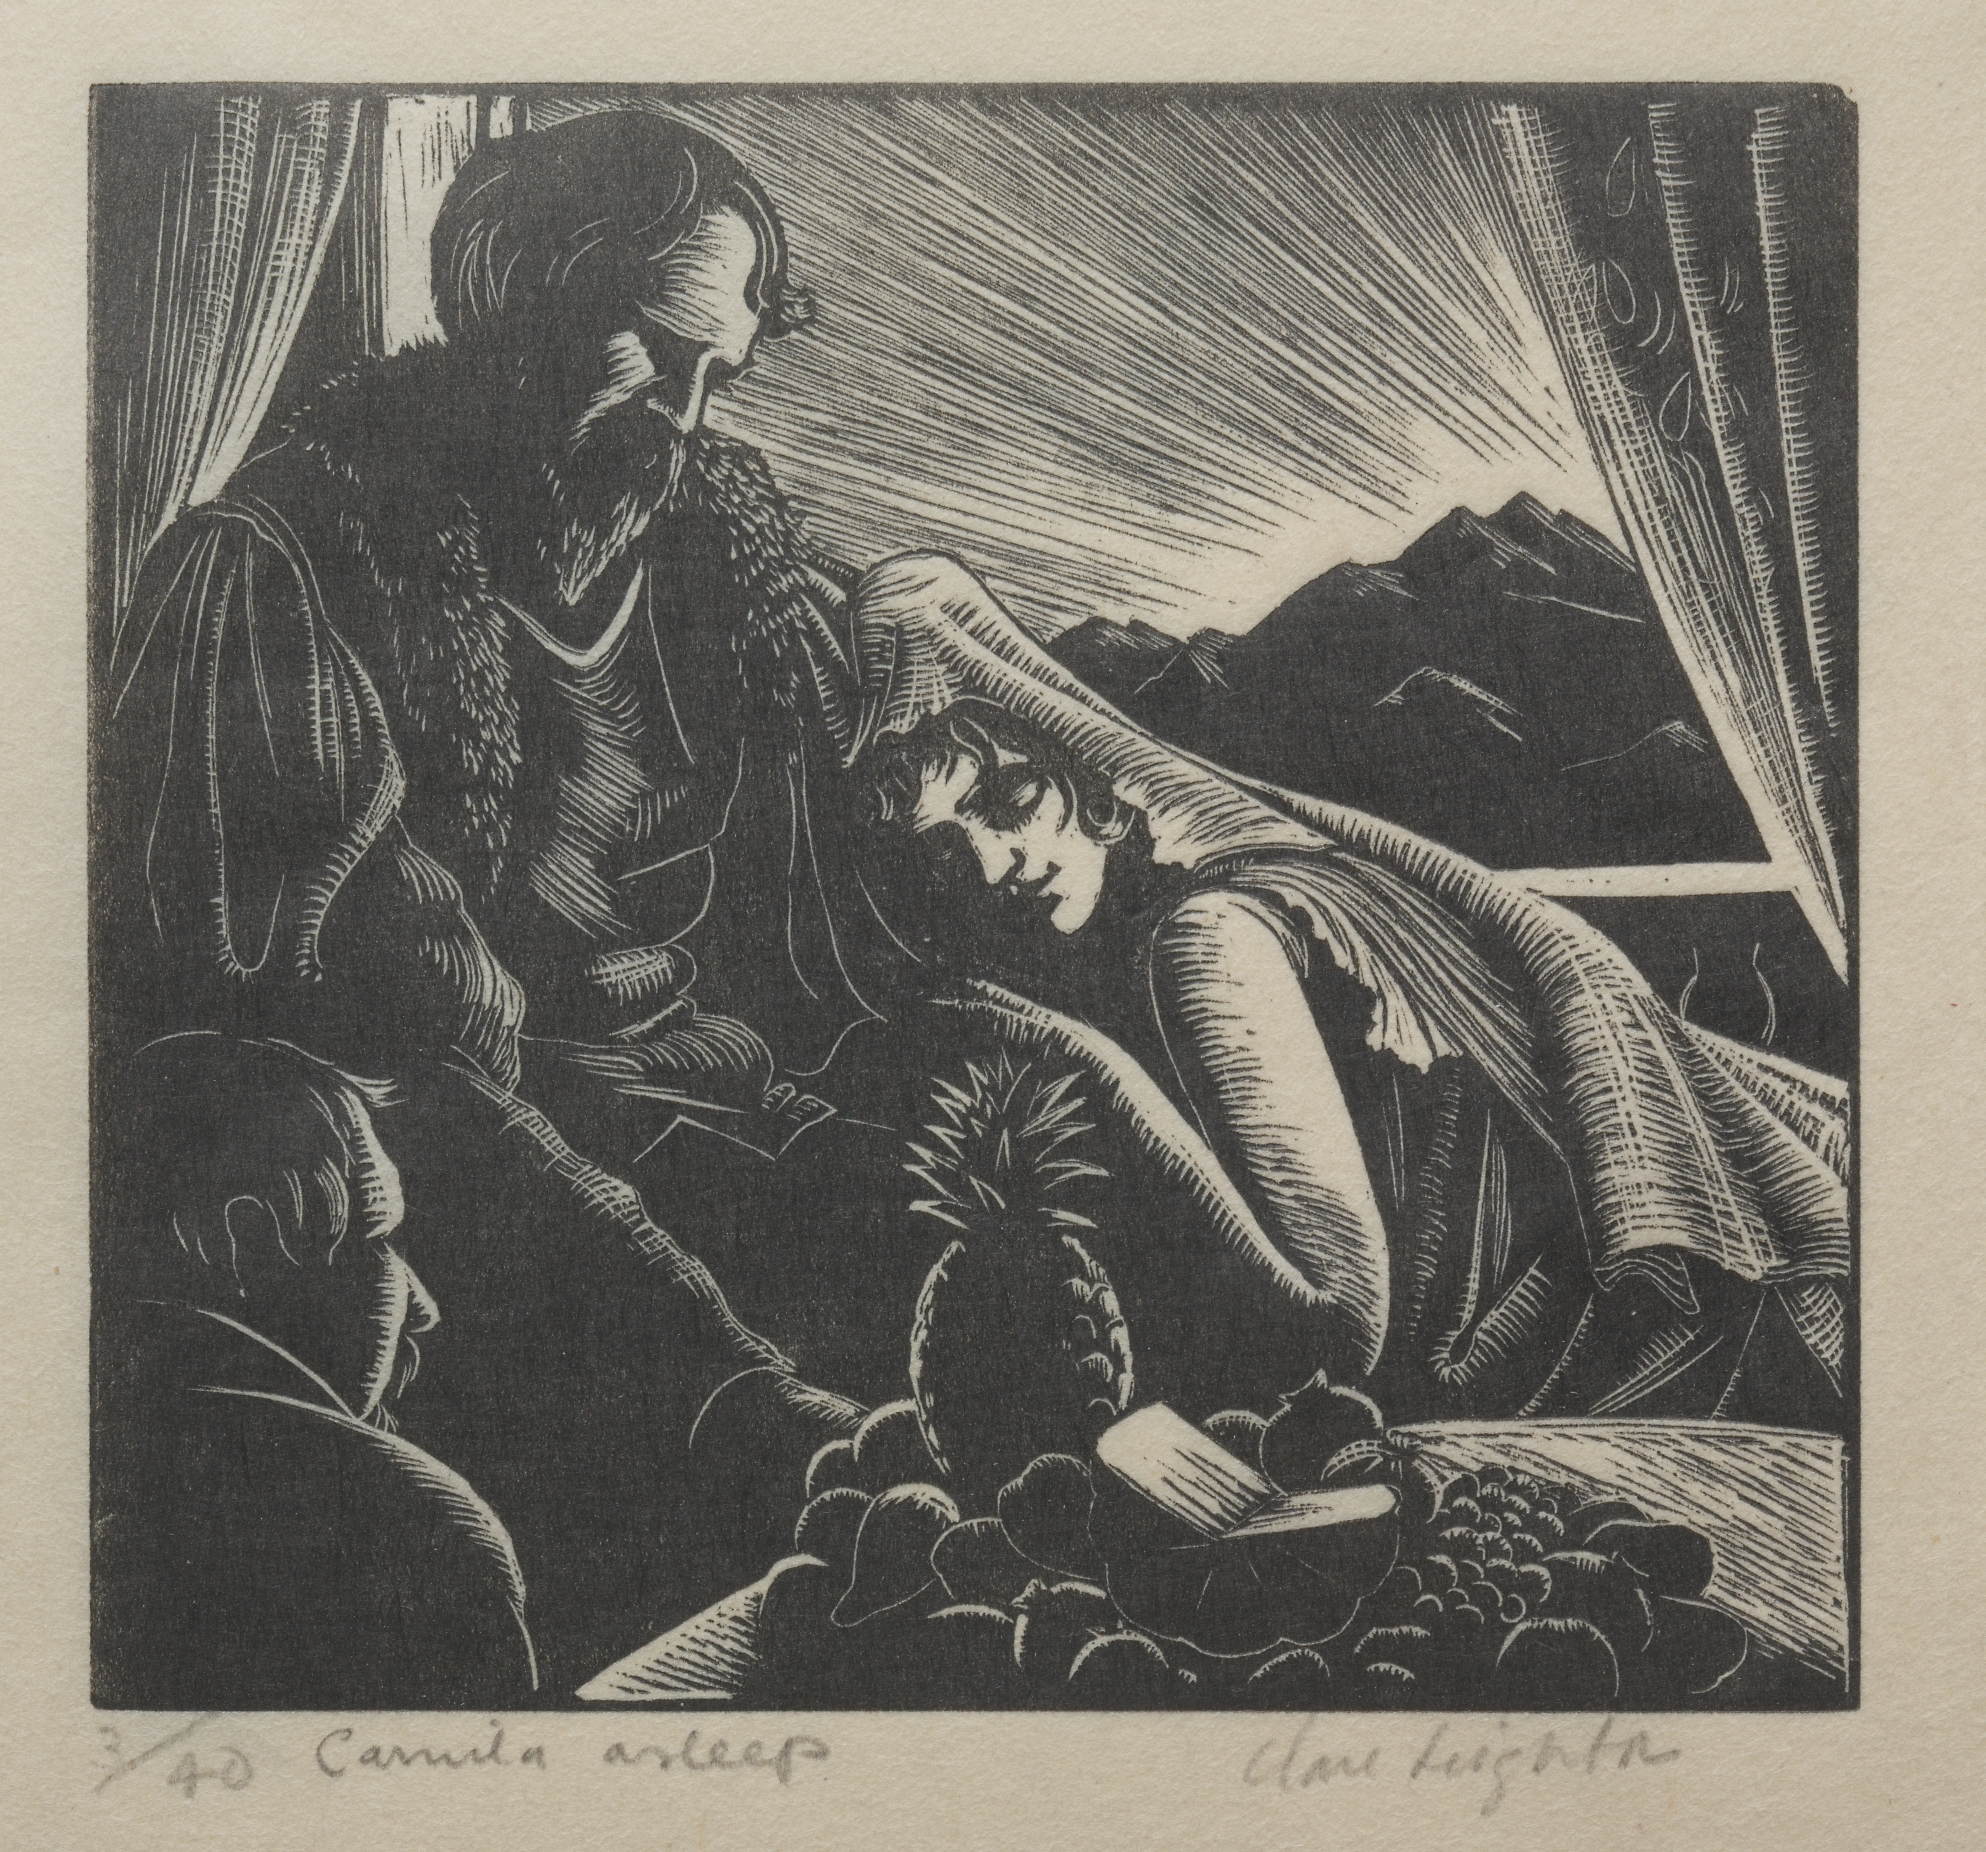 Camila Asleep (illustration for The Bridge of San Luis Rey by Thornton Wilder)